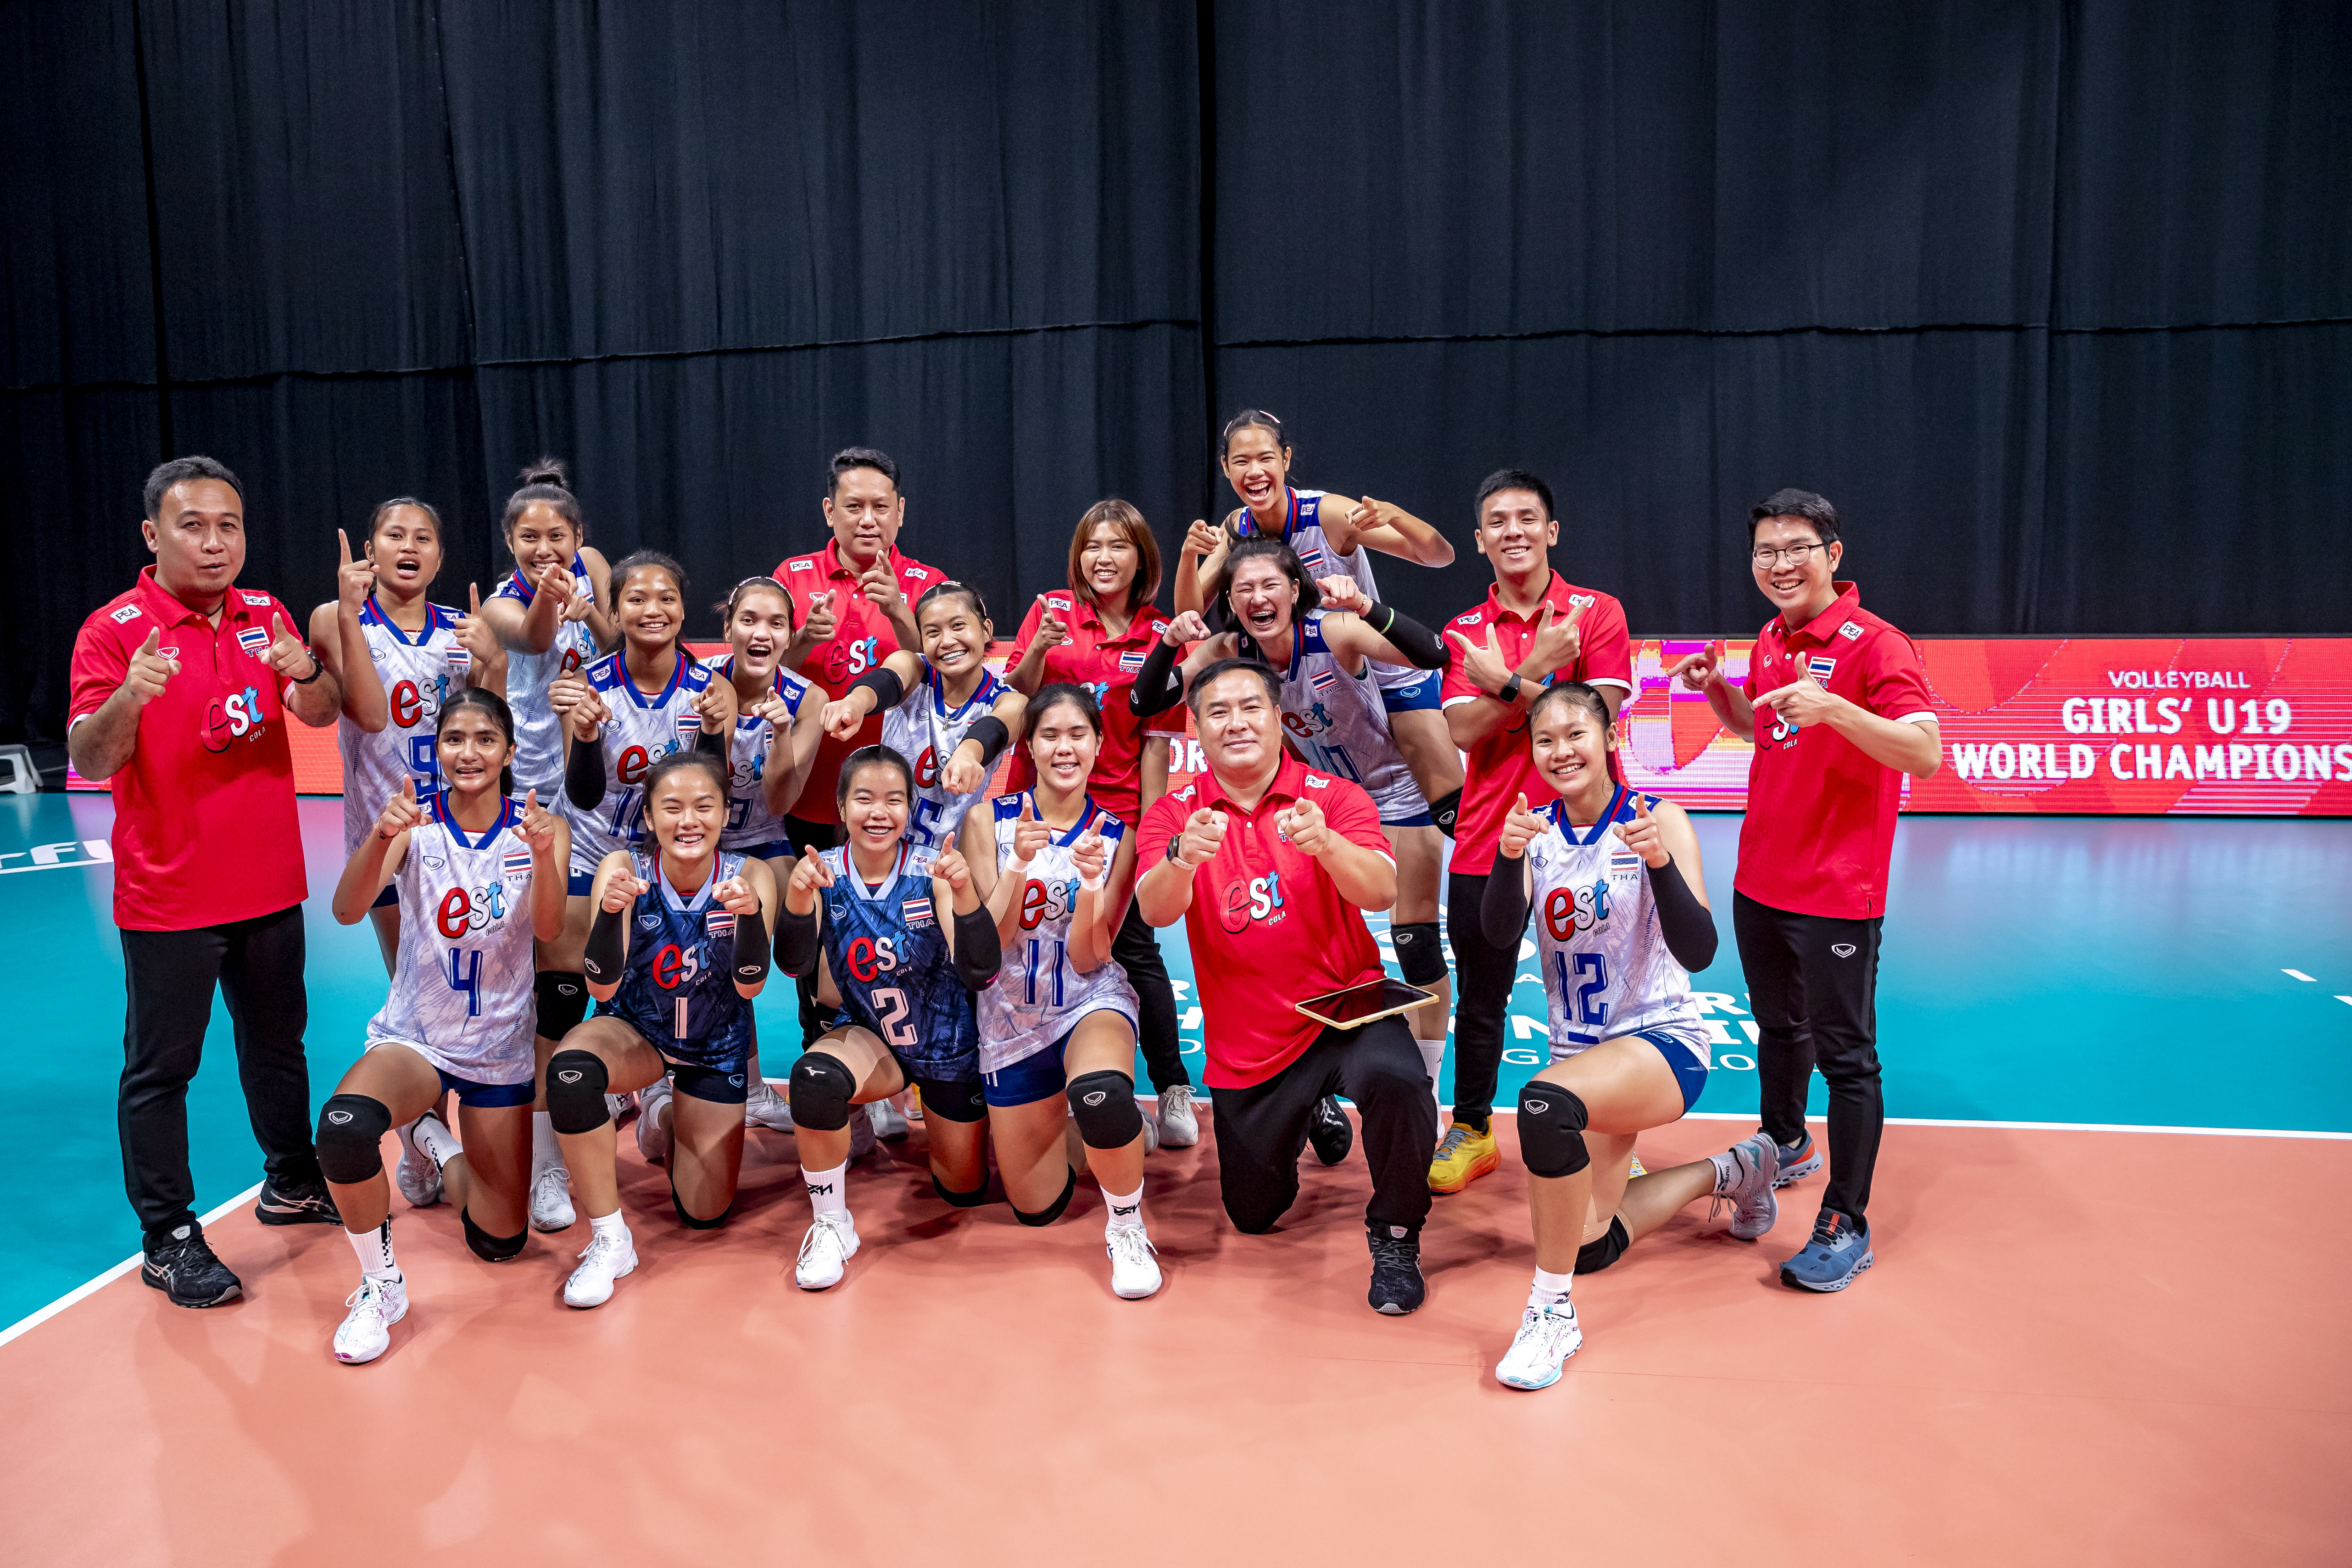 Girls U19 Worlds elimination bracket set in Croatia and Hungary volleyballworld